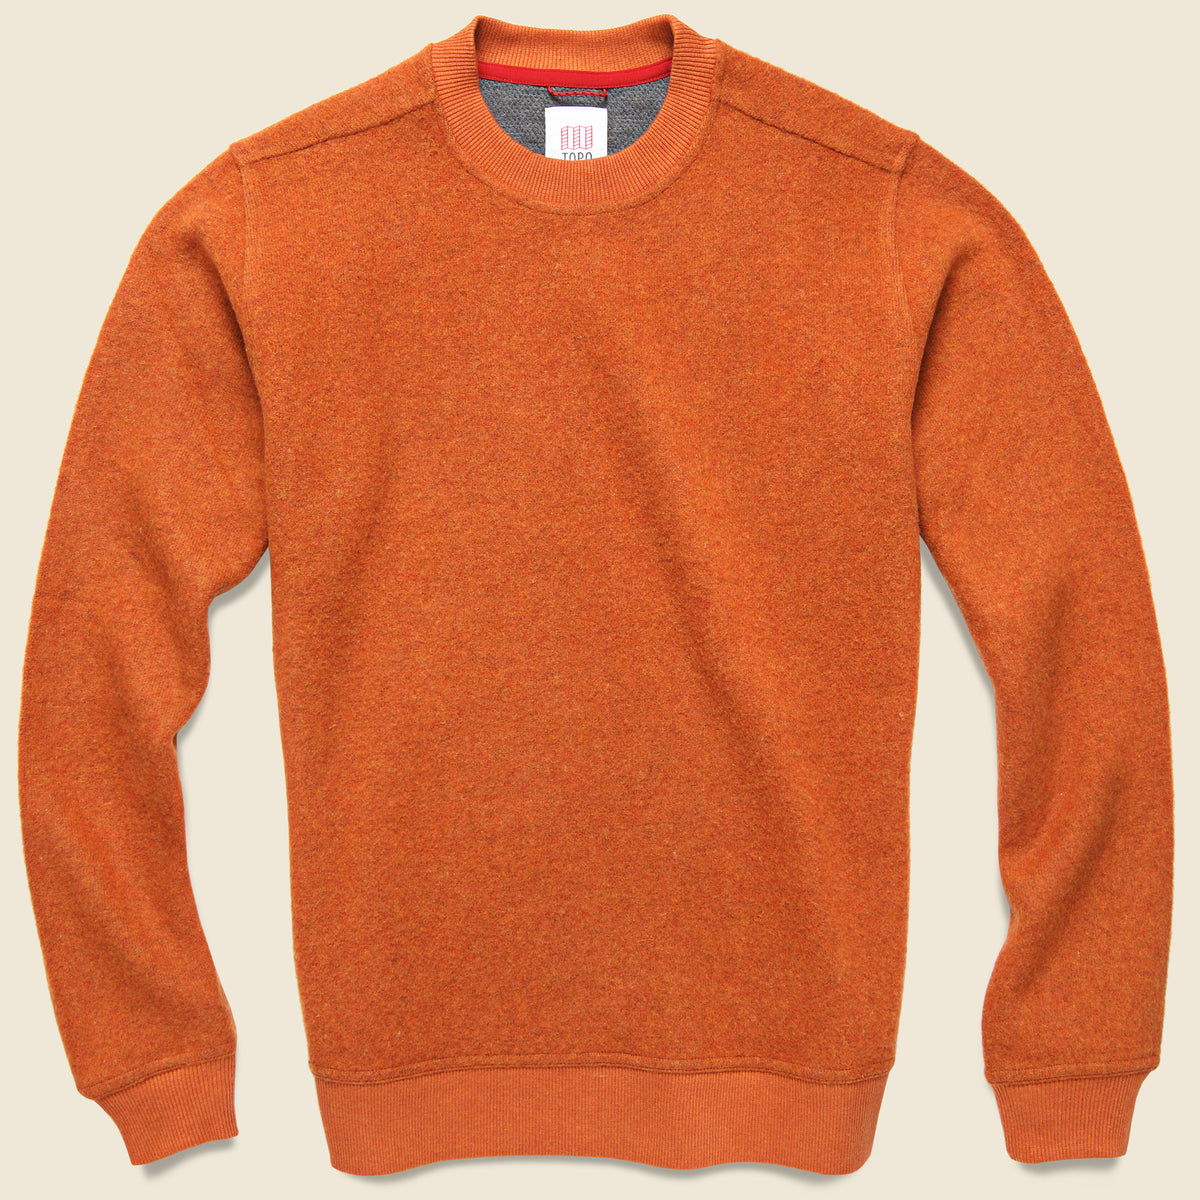 Global Sweater - Clay